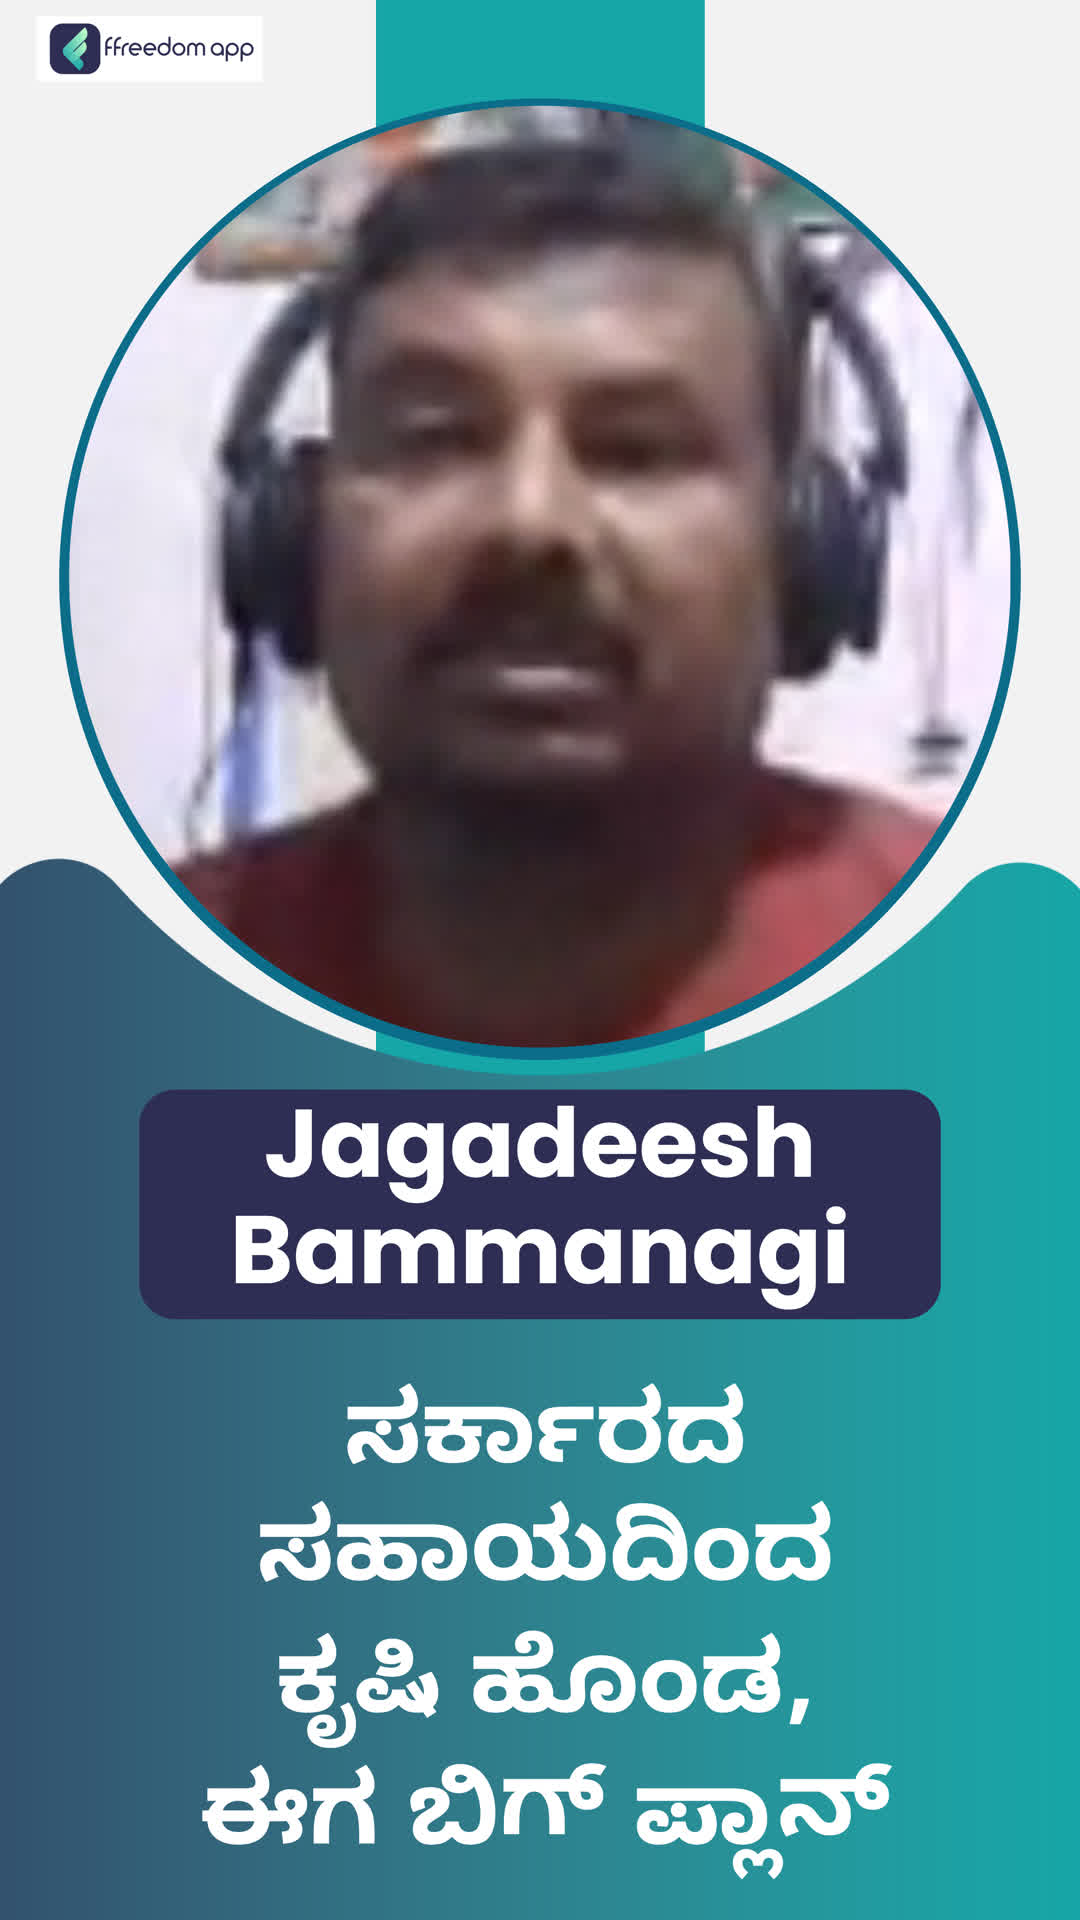 Jagadeesh's Honest Review of ffreedom app - East Godavari ,Andhra Pradesh